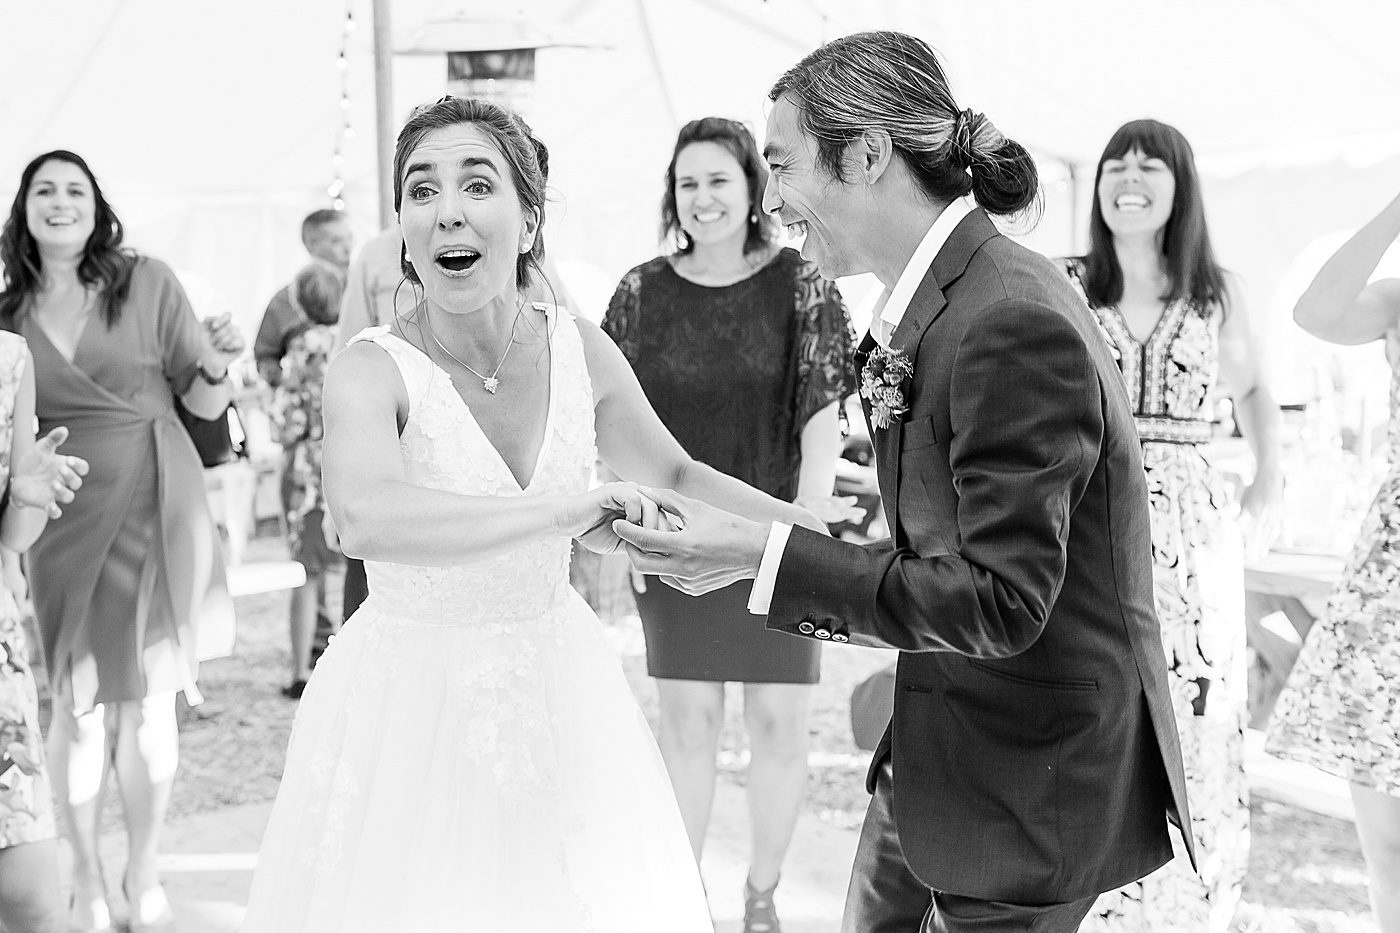 bride and groom dancing at a wedding reception